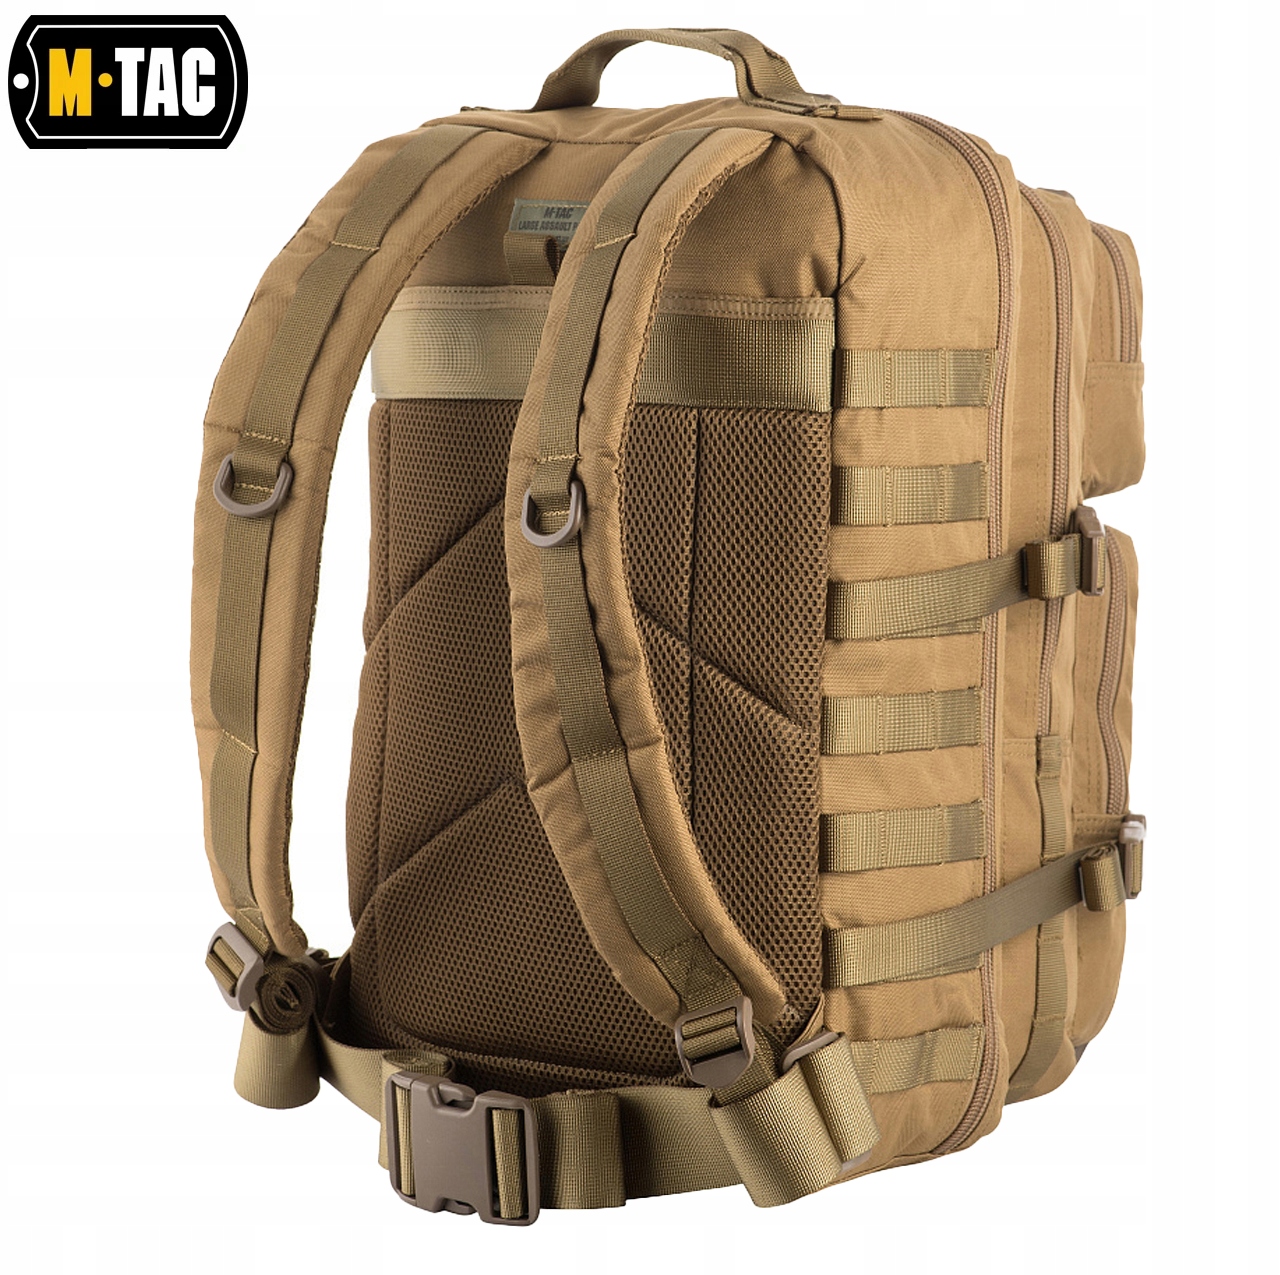 Plecak Wojskowy Taktyczny Large Assault Pack M-Tac Tan Kolor dominujący beże i brązy